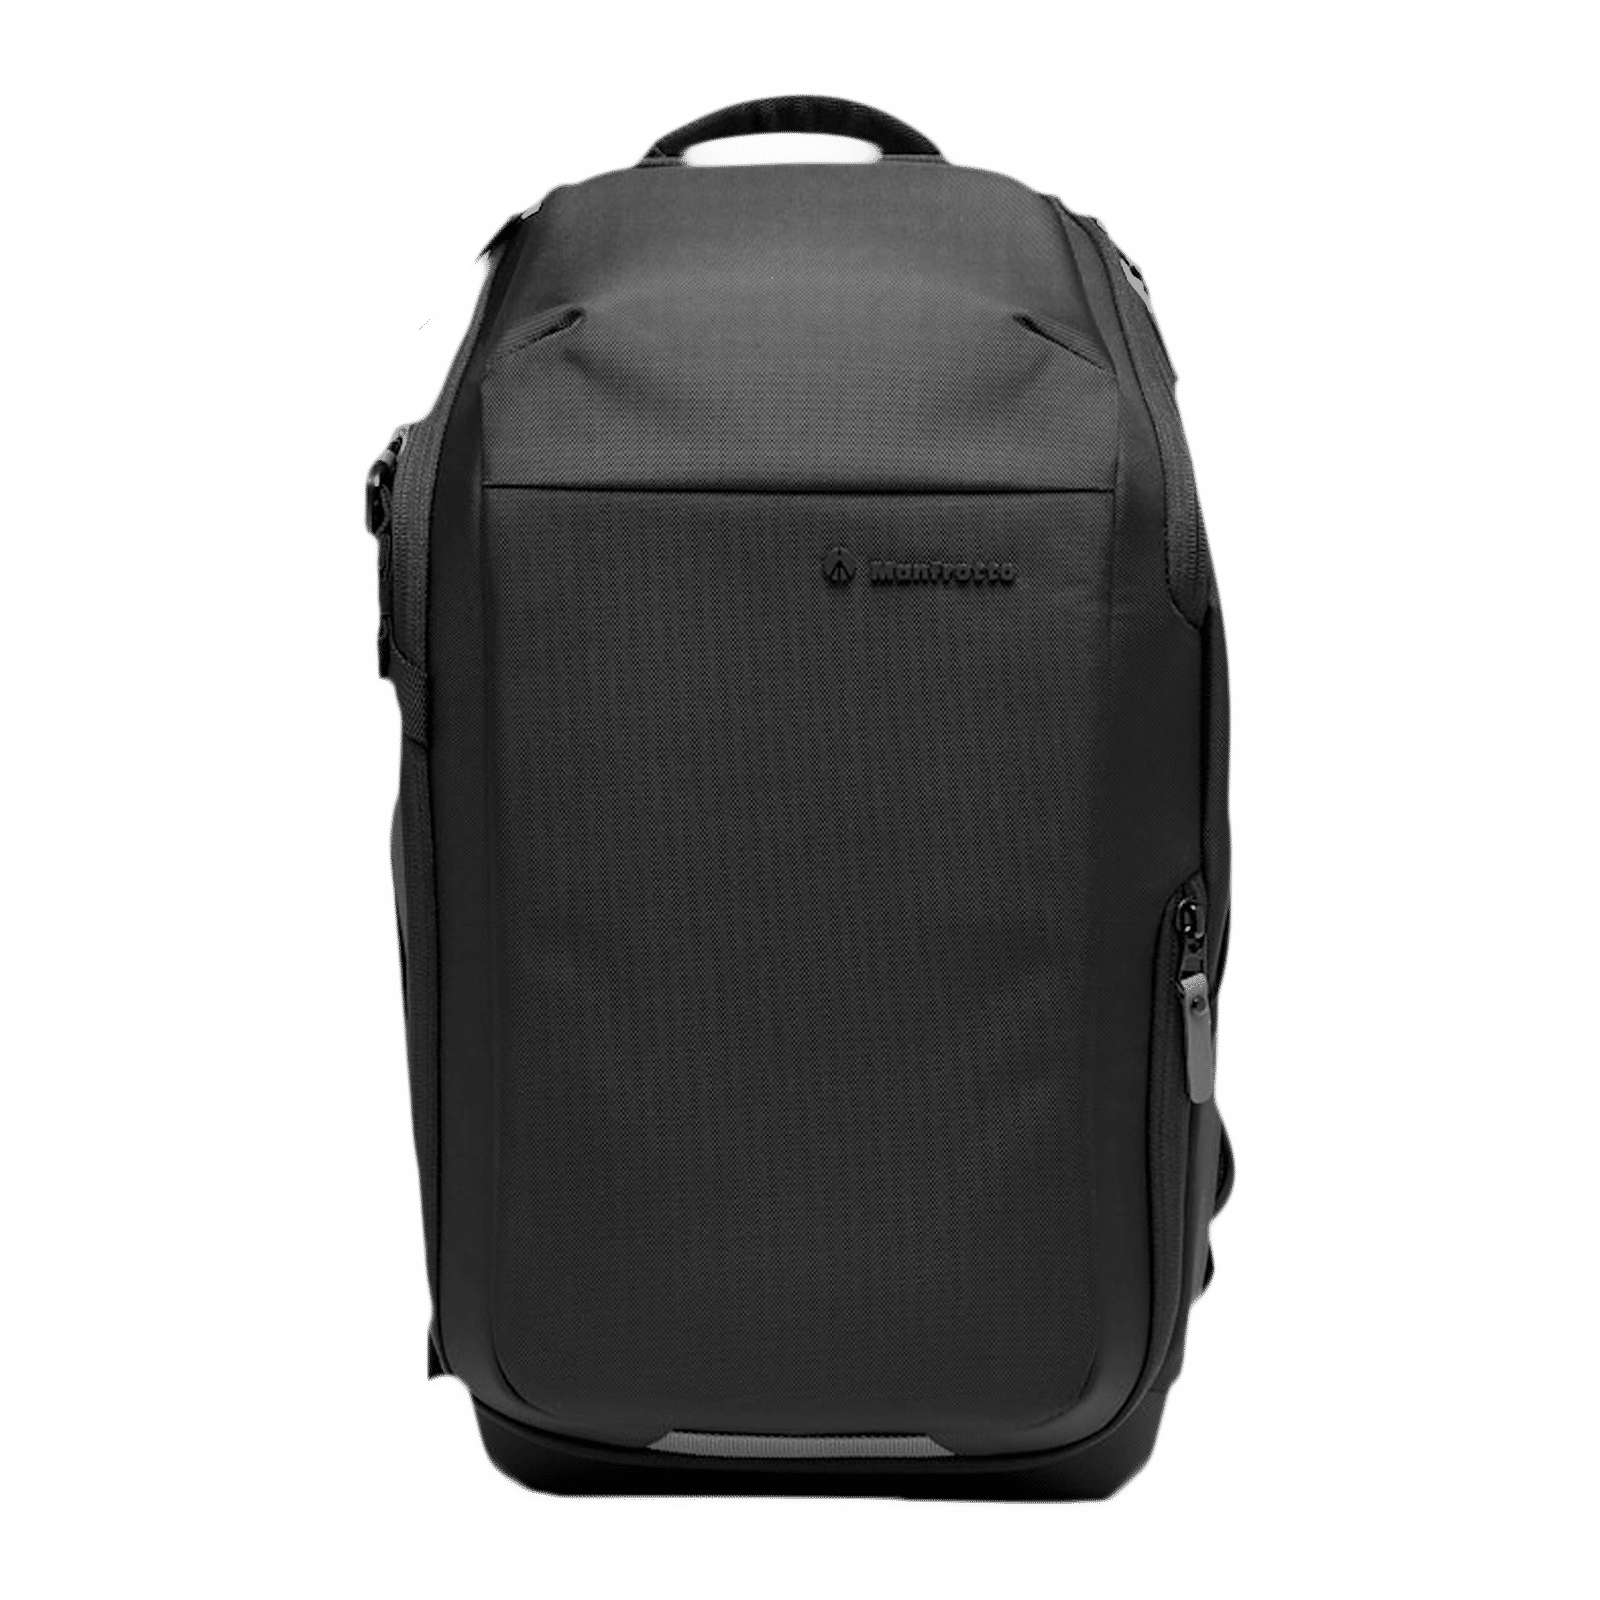 Billingham 445 Camera Bag - Black Canvas / Tan Leather – Billingham USA